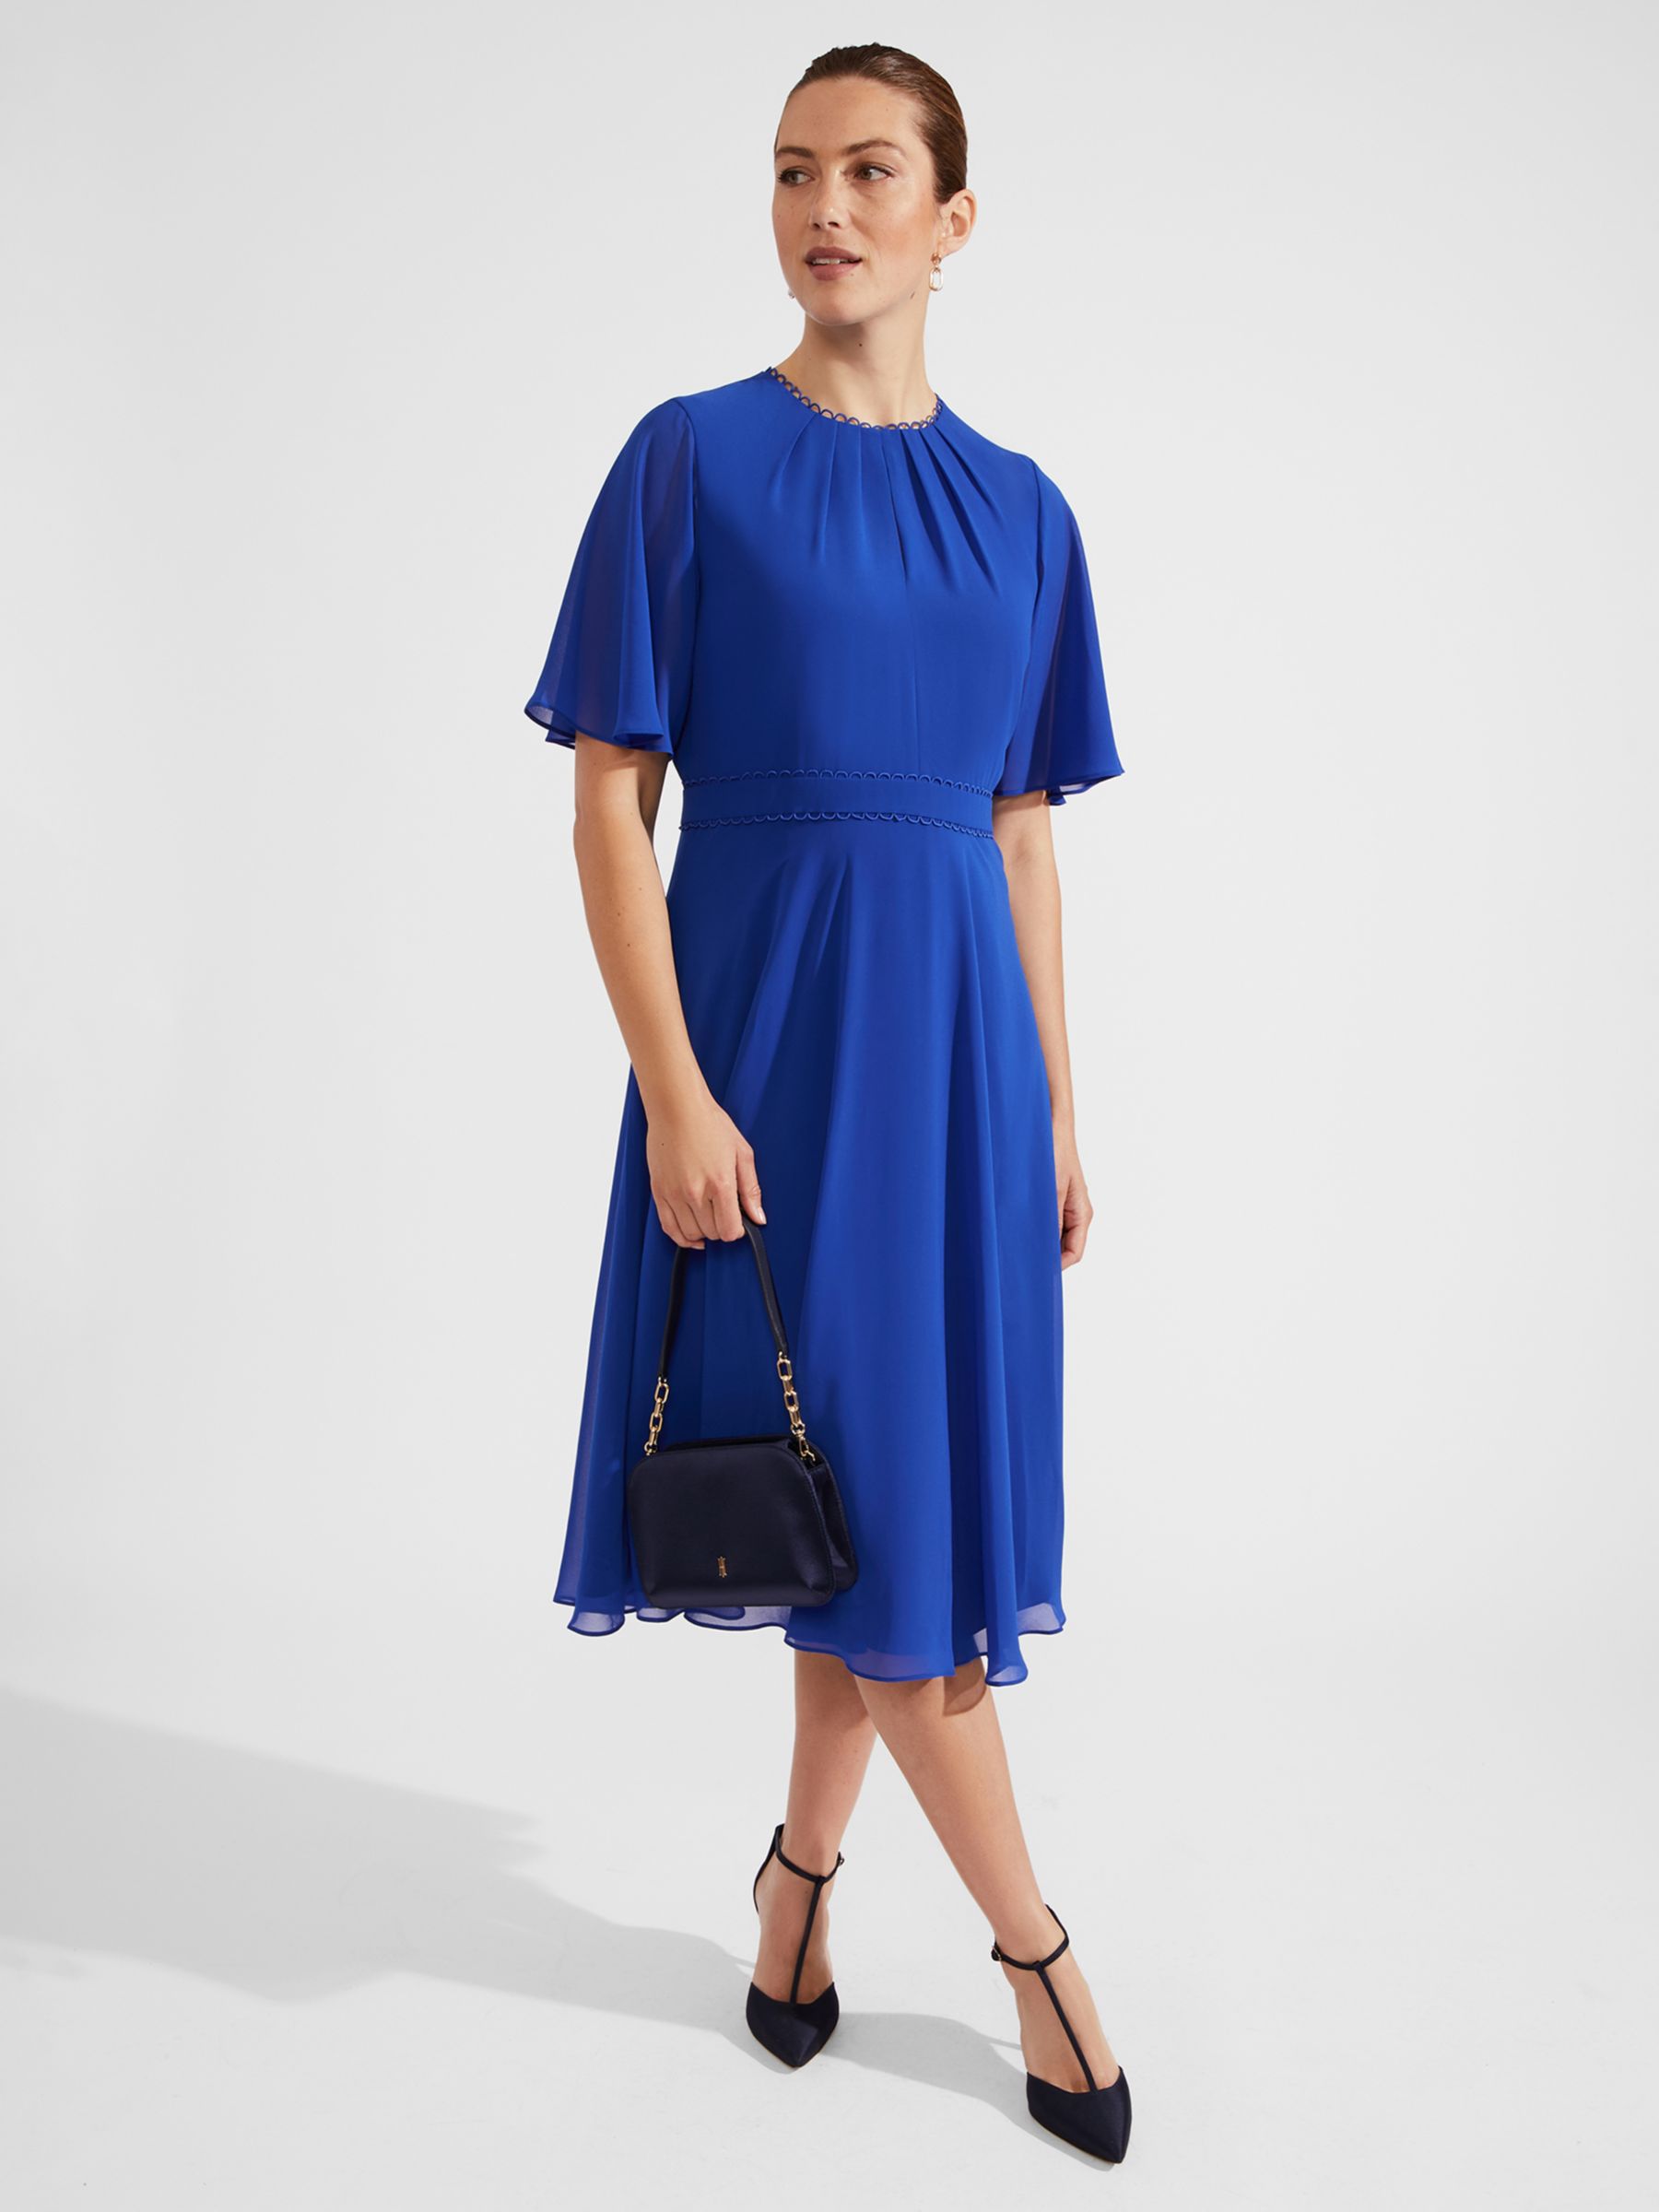 Hobbs Samara Midi Dress, Lapis Blue at John Lewis & Partners